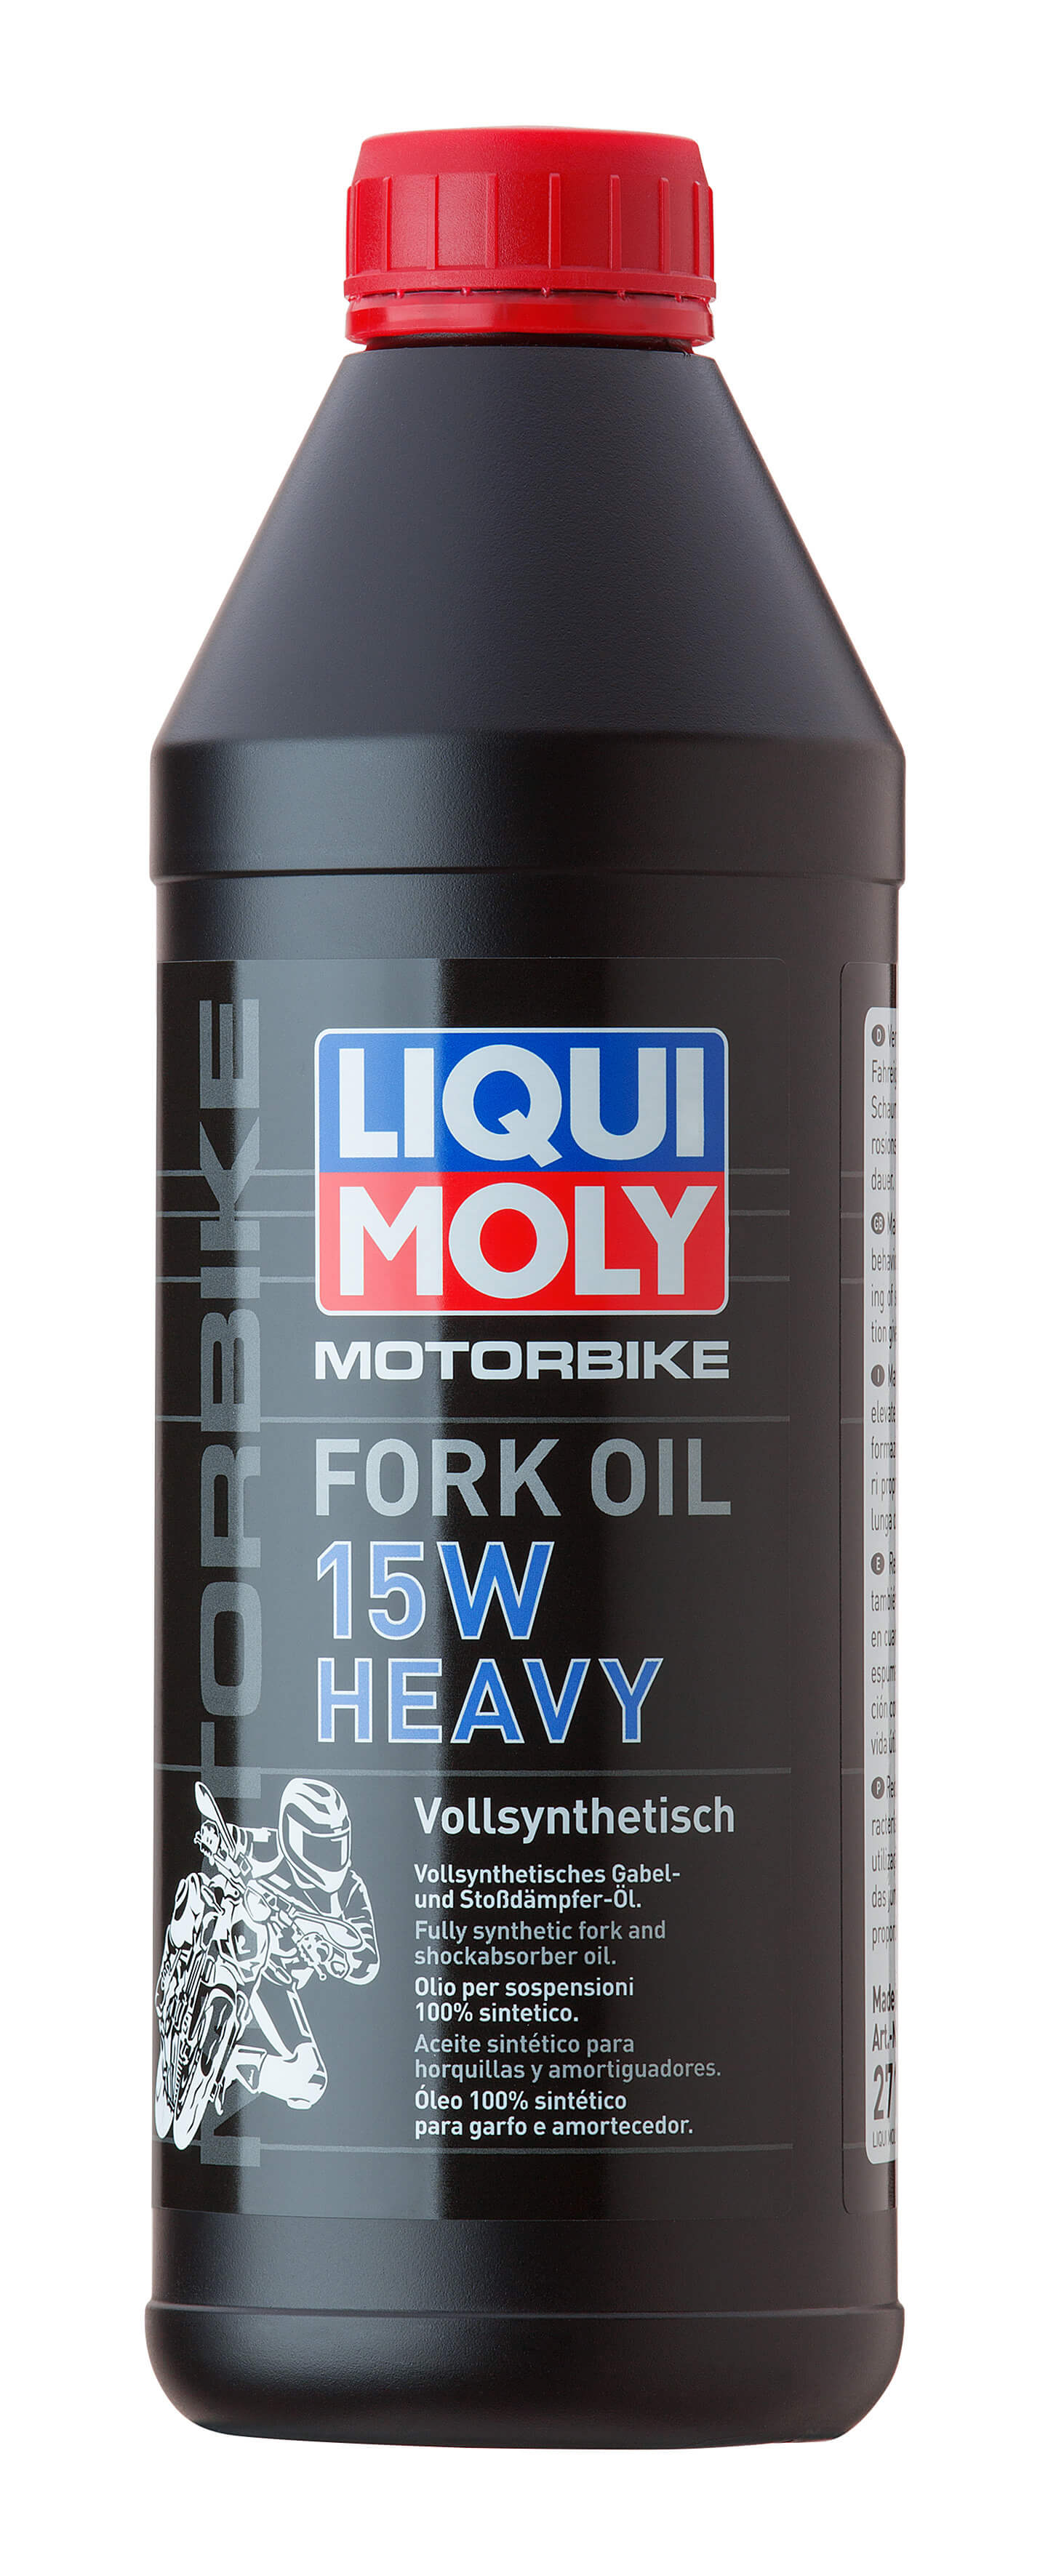 Масло для вилок и амортизаторов 15W (синтетическое) Motorbike Fork Oil 15W Heavy  1L